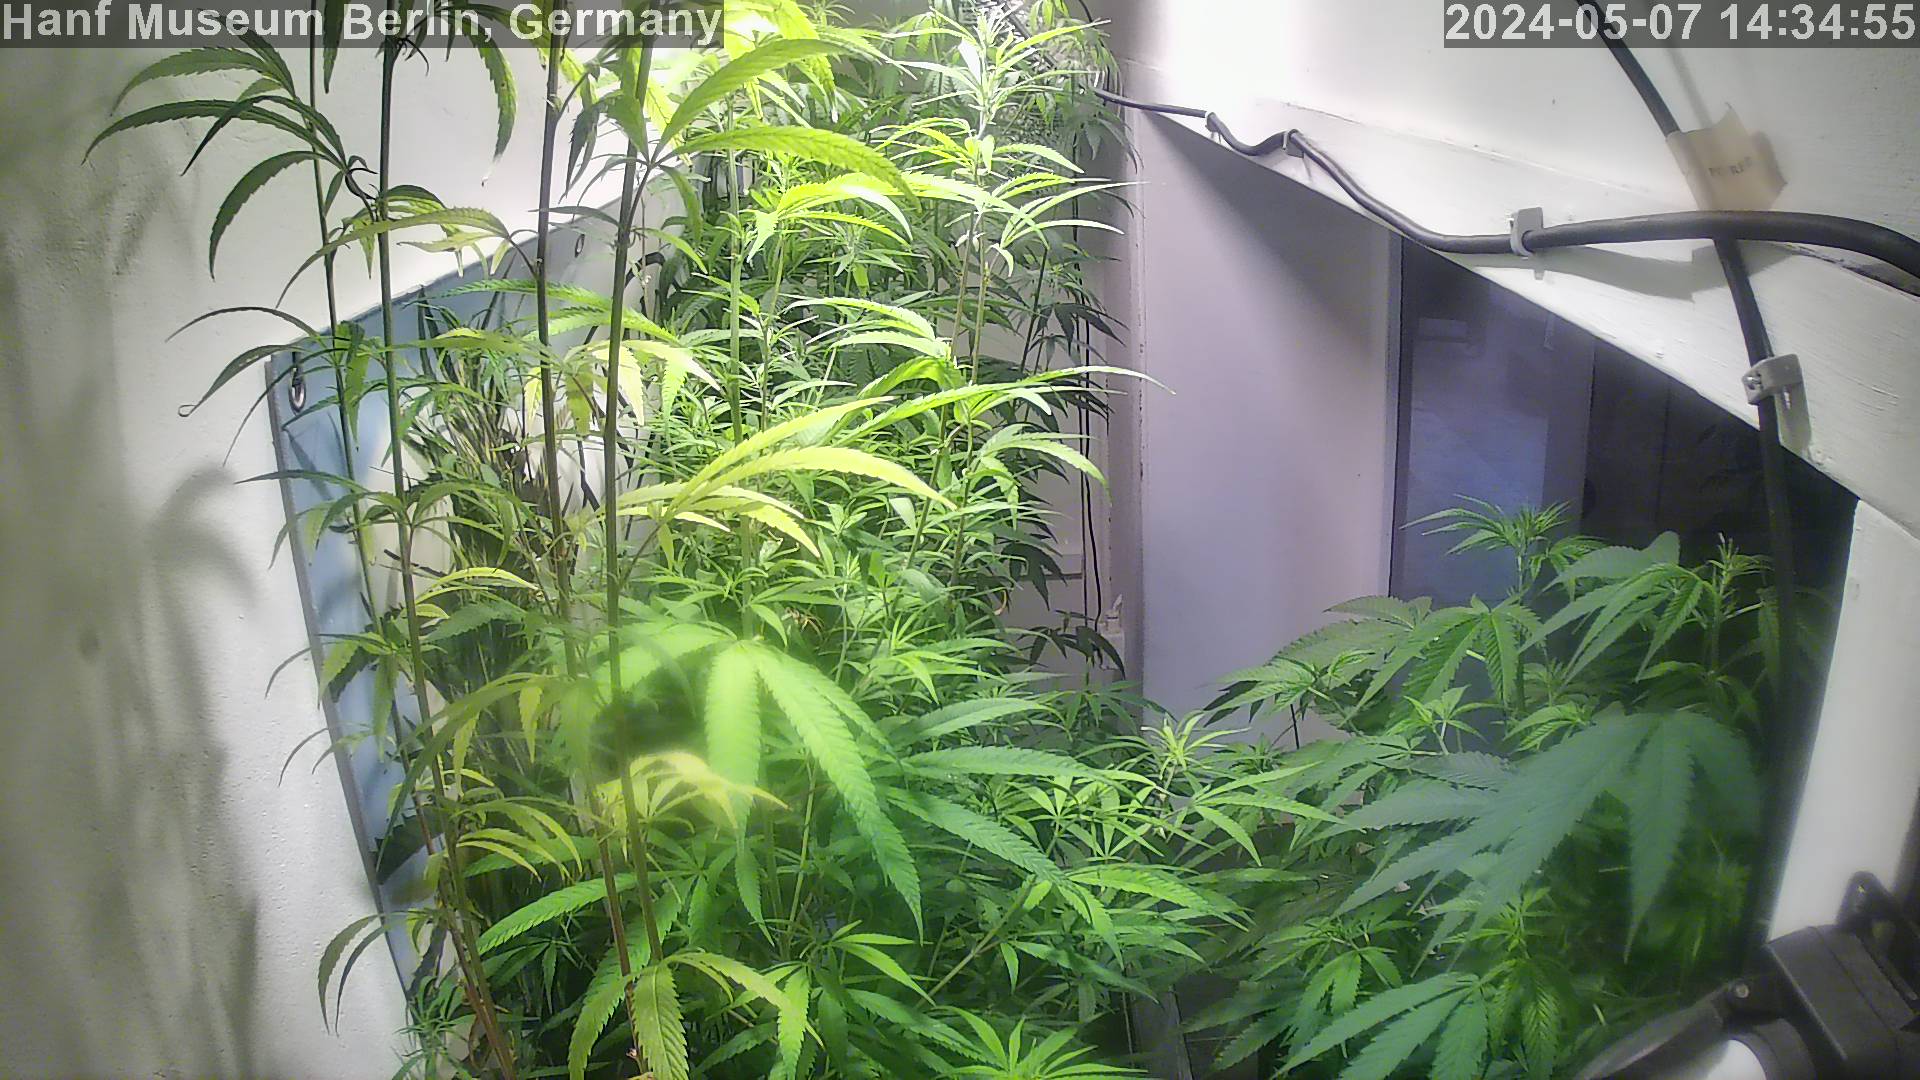 Live webcam of the Hanf Museum Berlin Cannabis Growroom